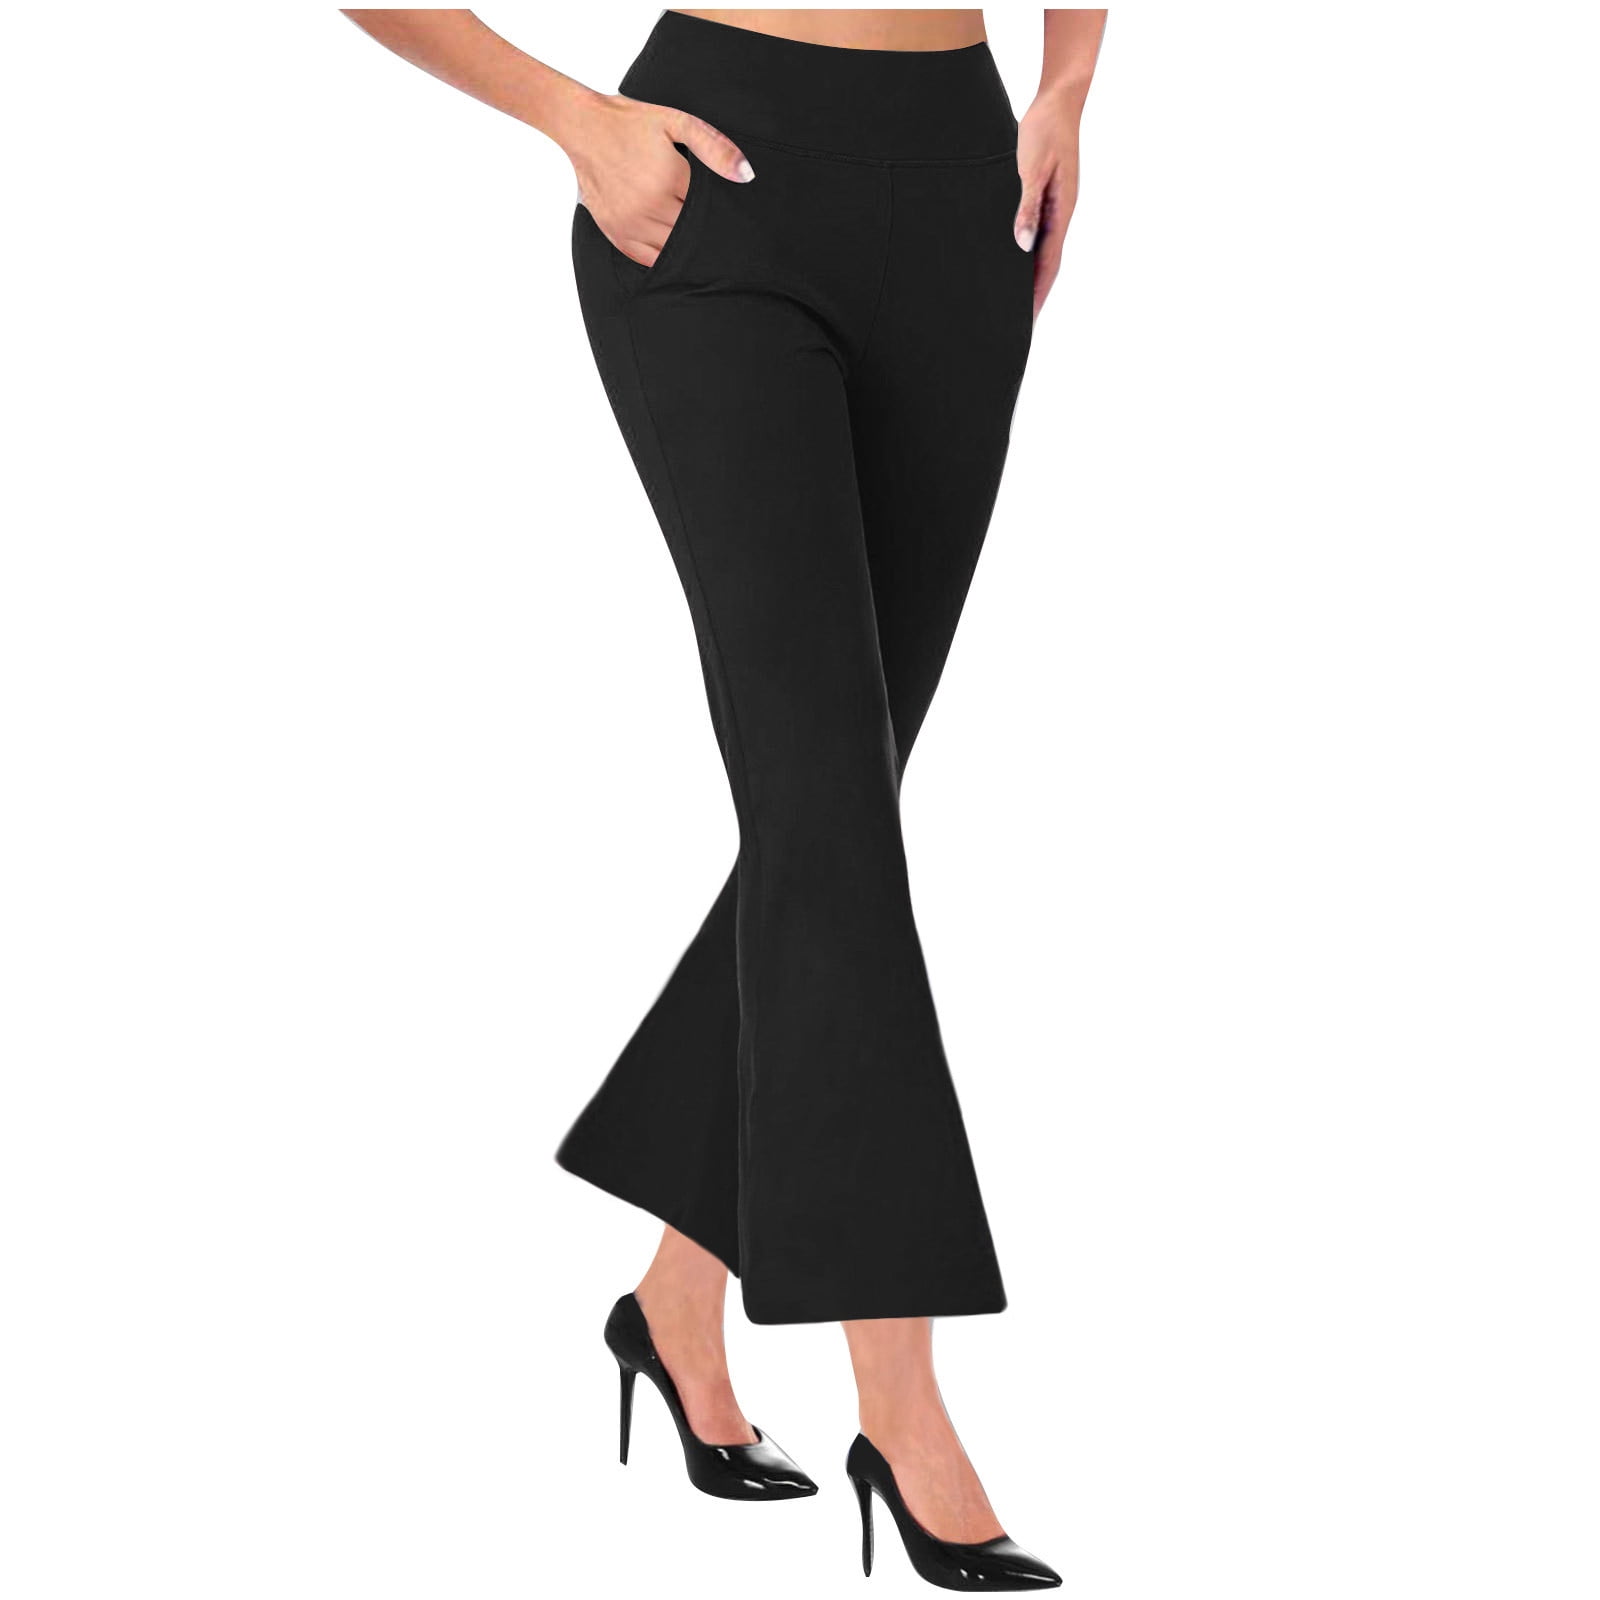 Hfyihgf Women's Yoga Dress Pants Stretchy Work Slacks Business Casual  Straight-Leg Bootcut Pull on Trousers(Black,L)